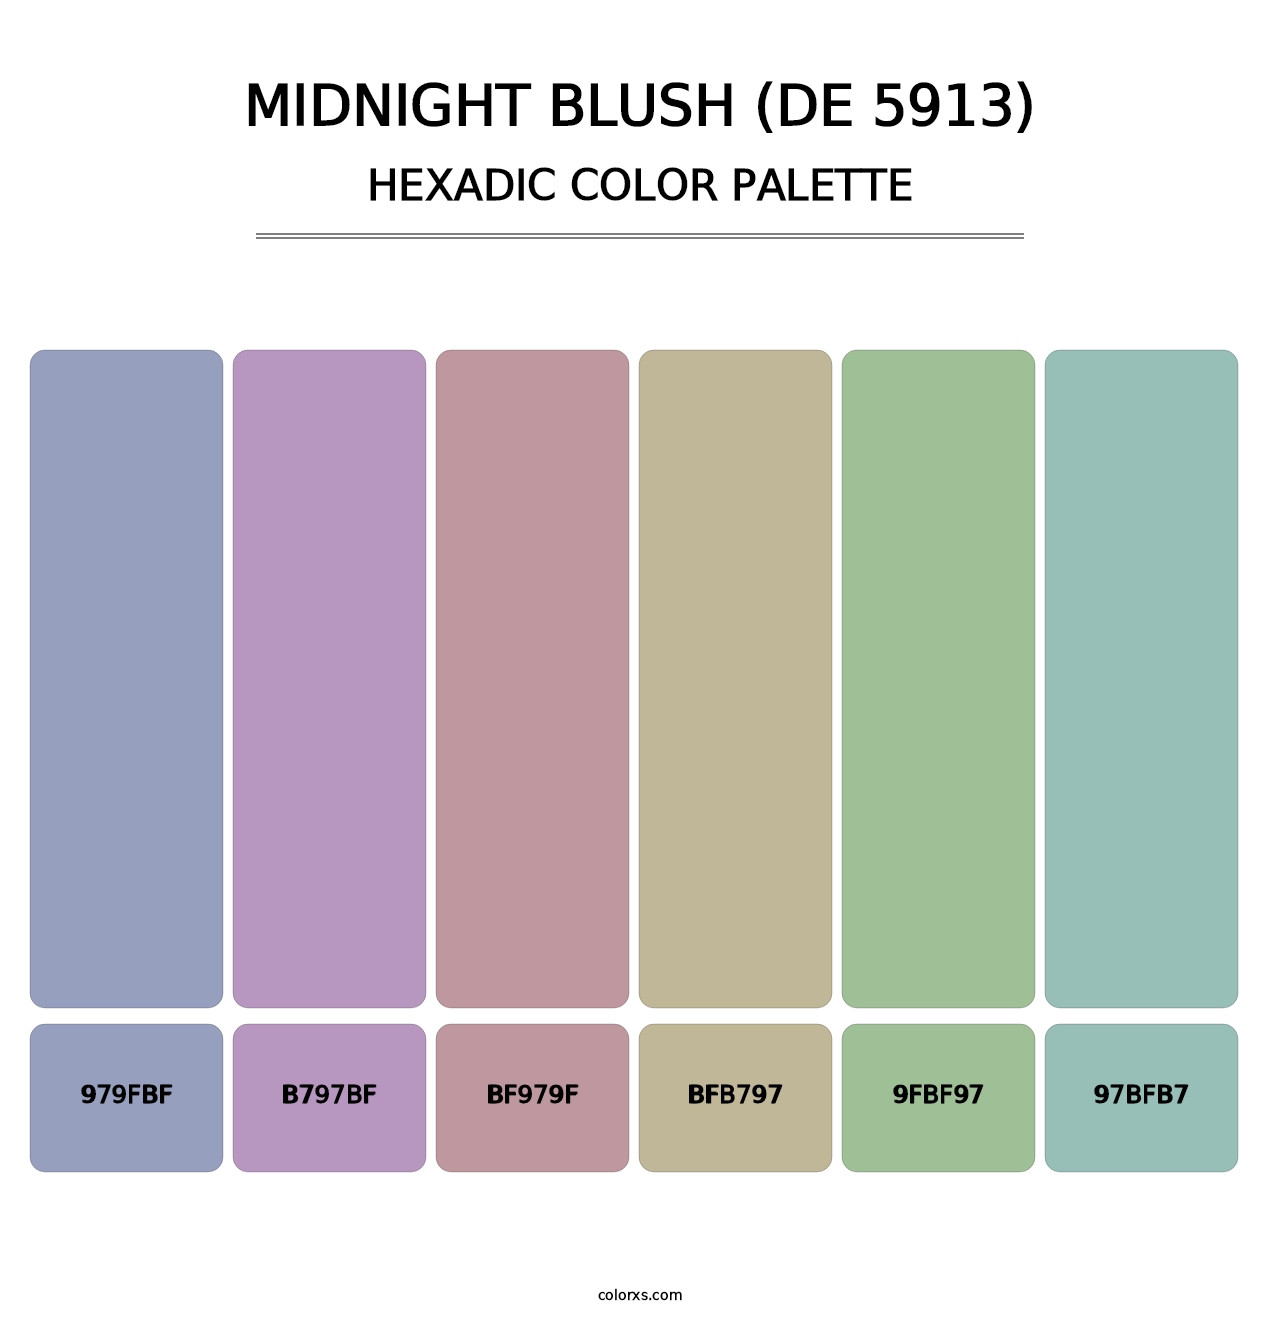 Midnight Blush (DE 5913) - Hexadic Color Palette